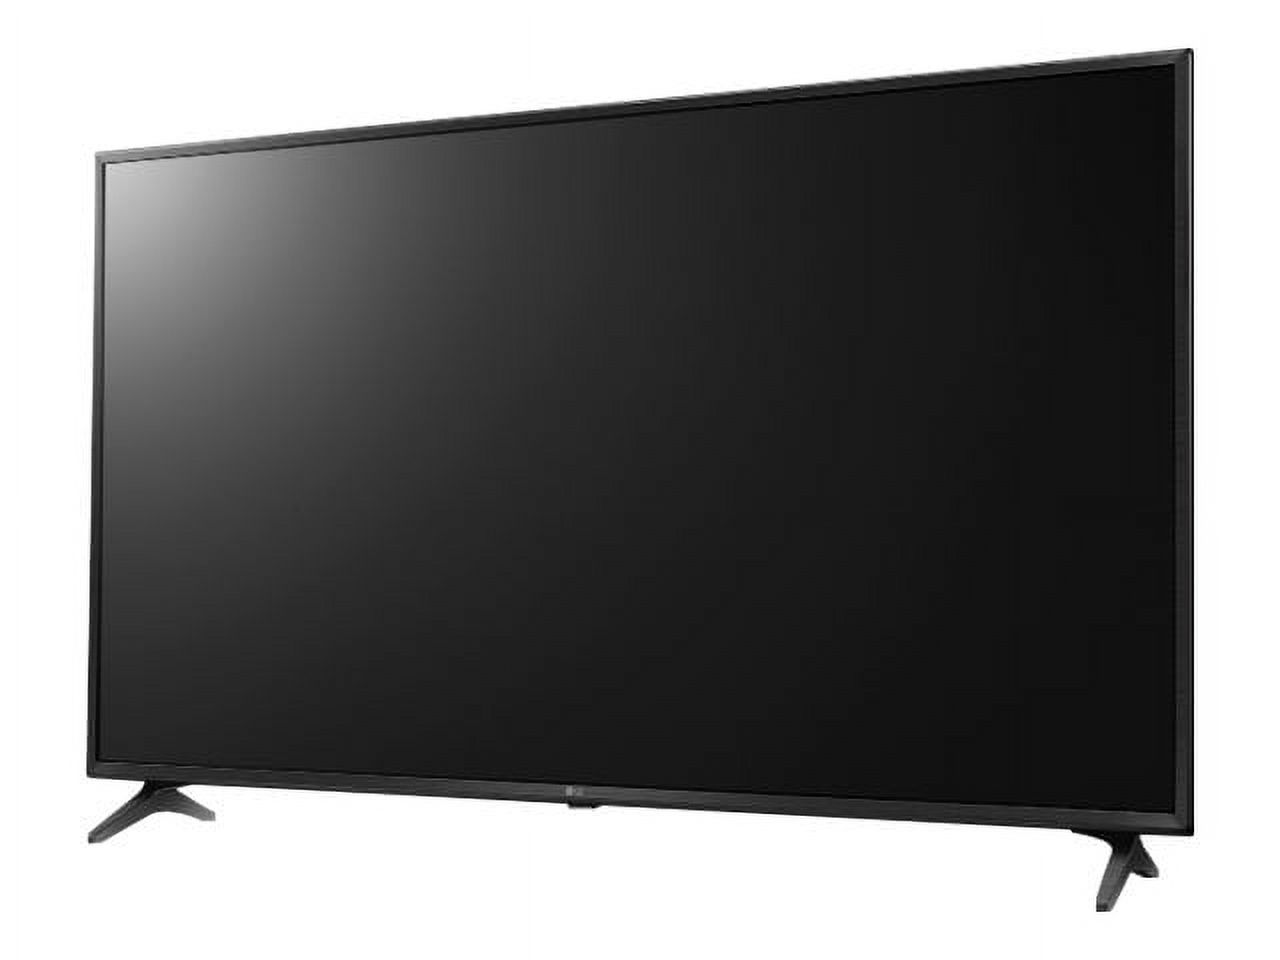 LG 55" Class 4K UHDTV (2160p) HDR Smart LED-LCD TV (55UM6910PUC) - image 1 of 7